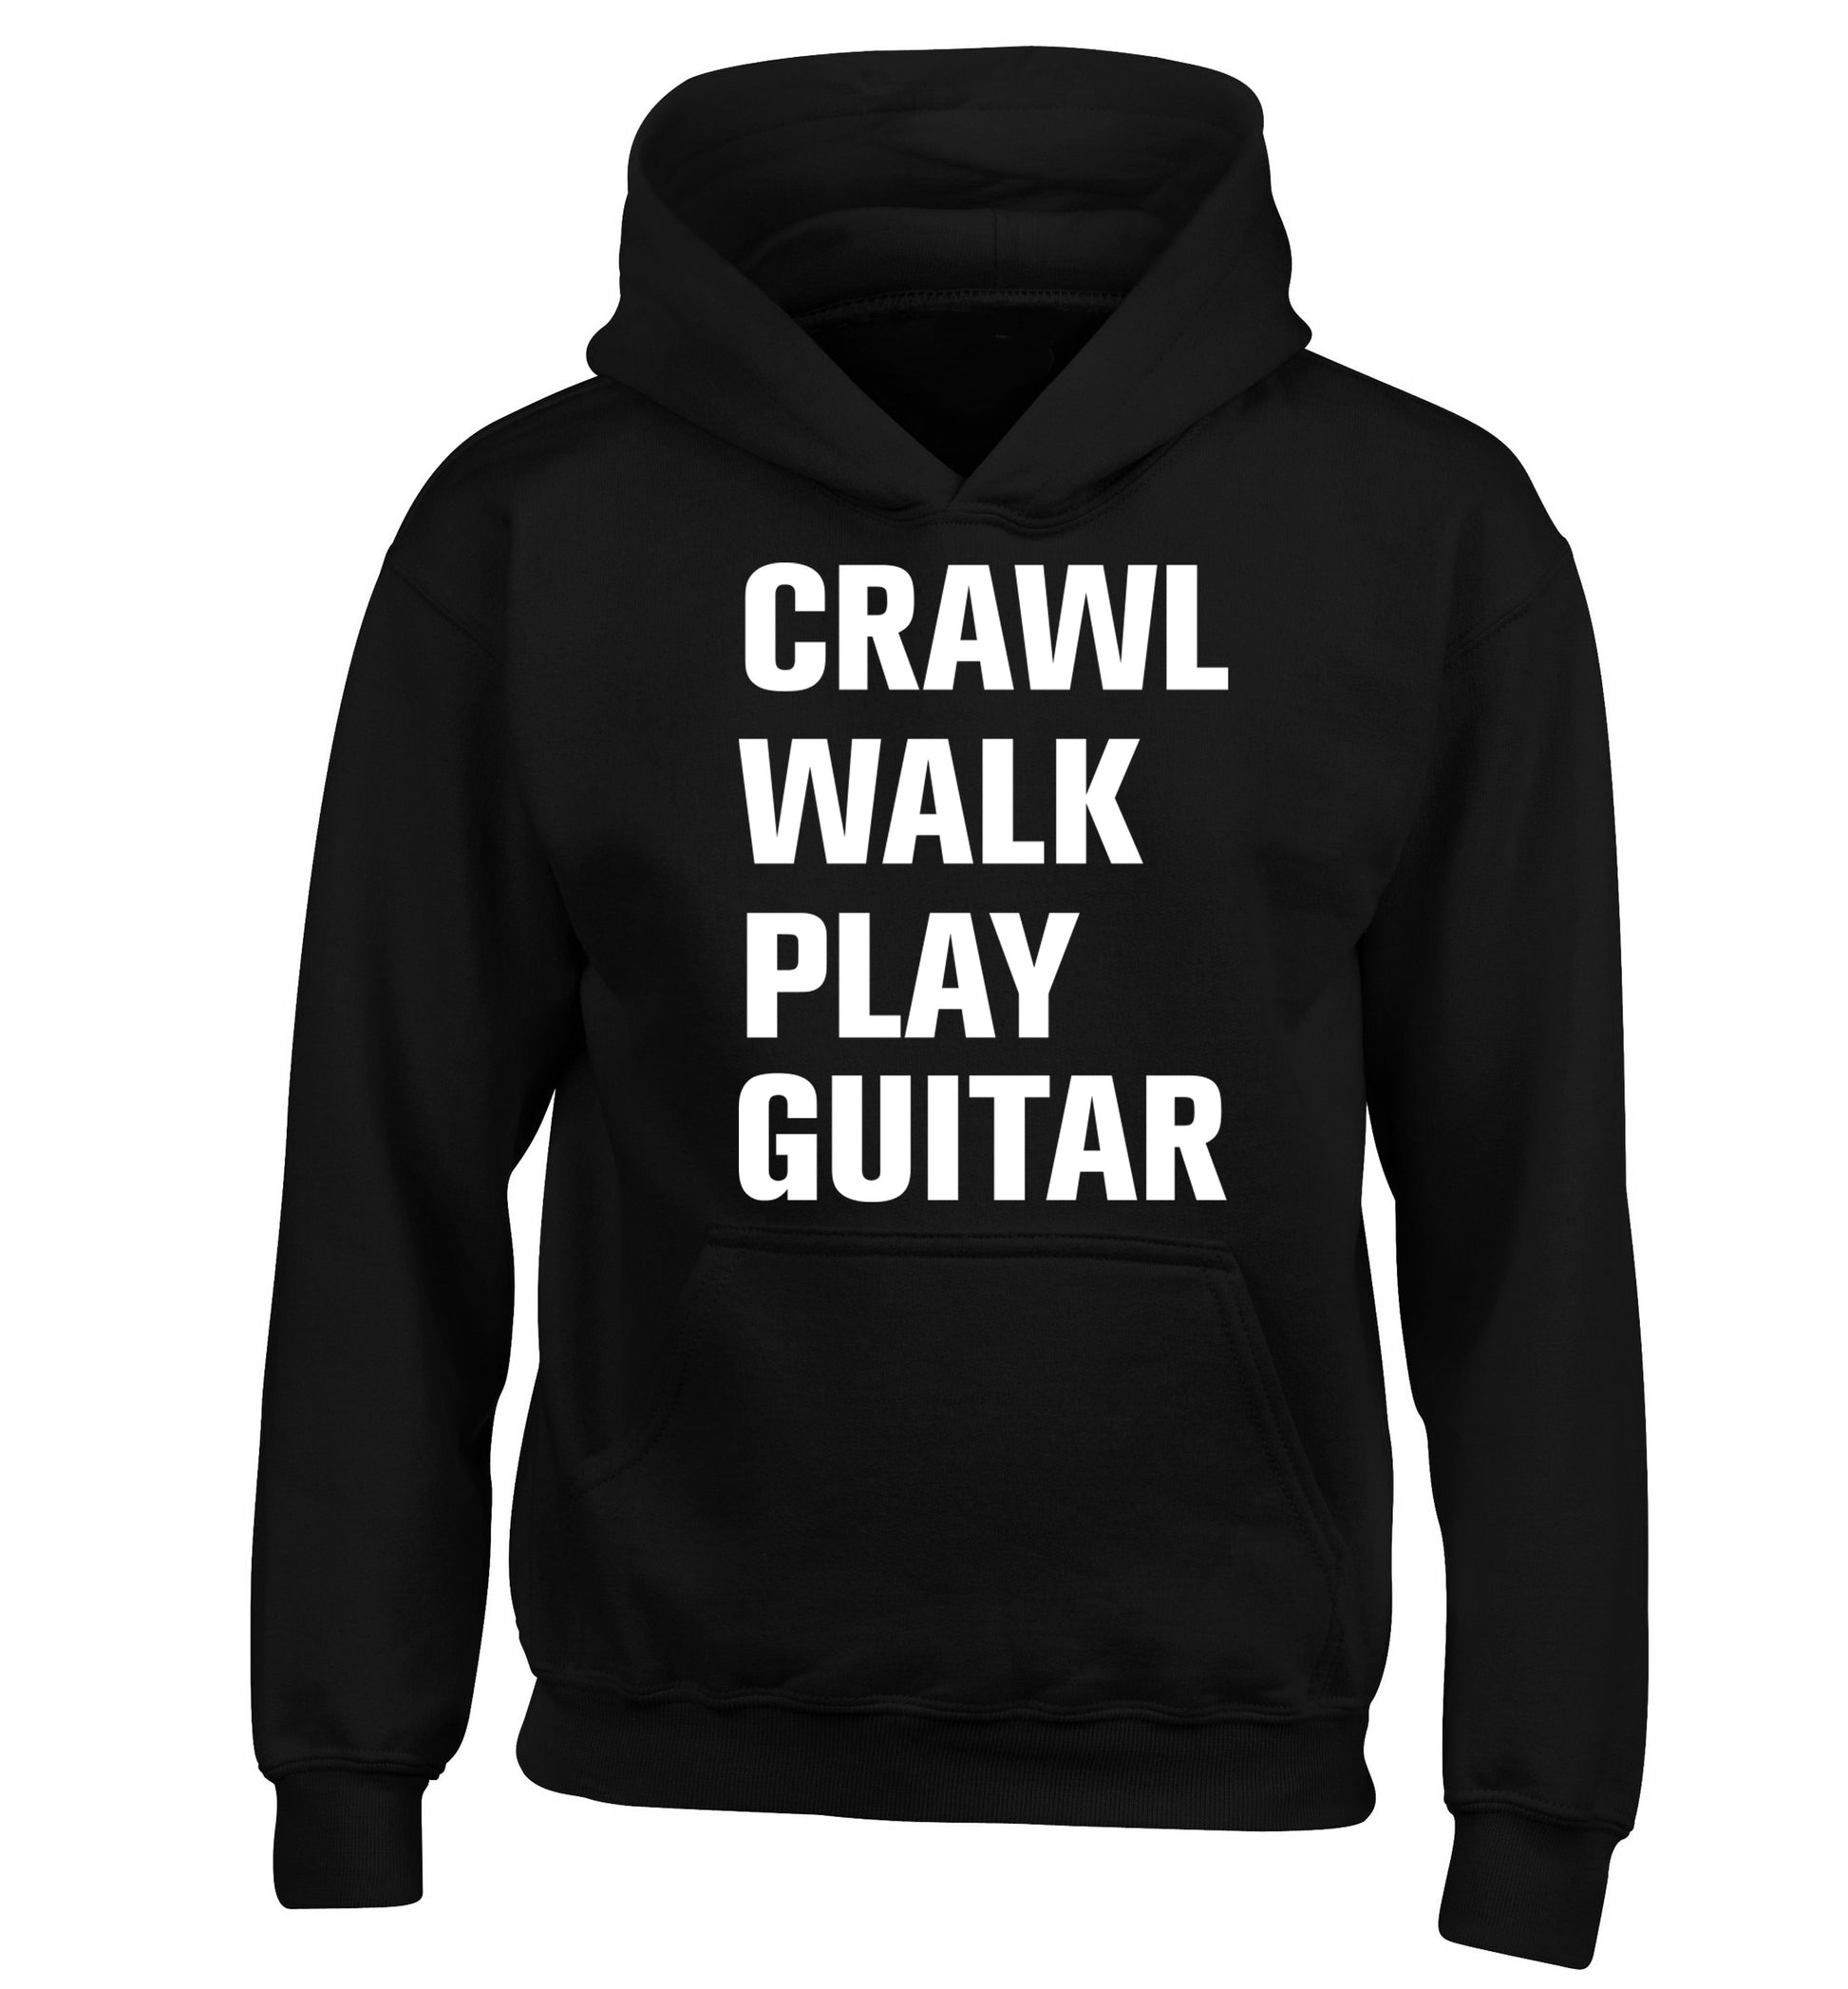 Crawl walk play guitar children's black hoodie 12-13 Years